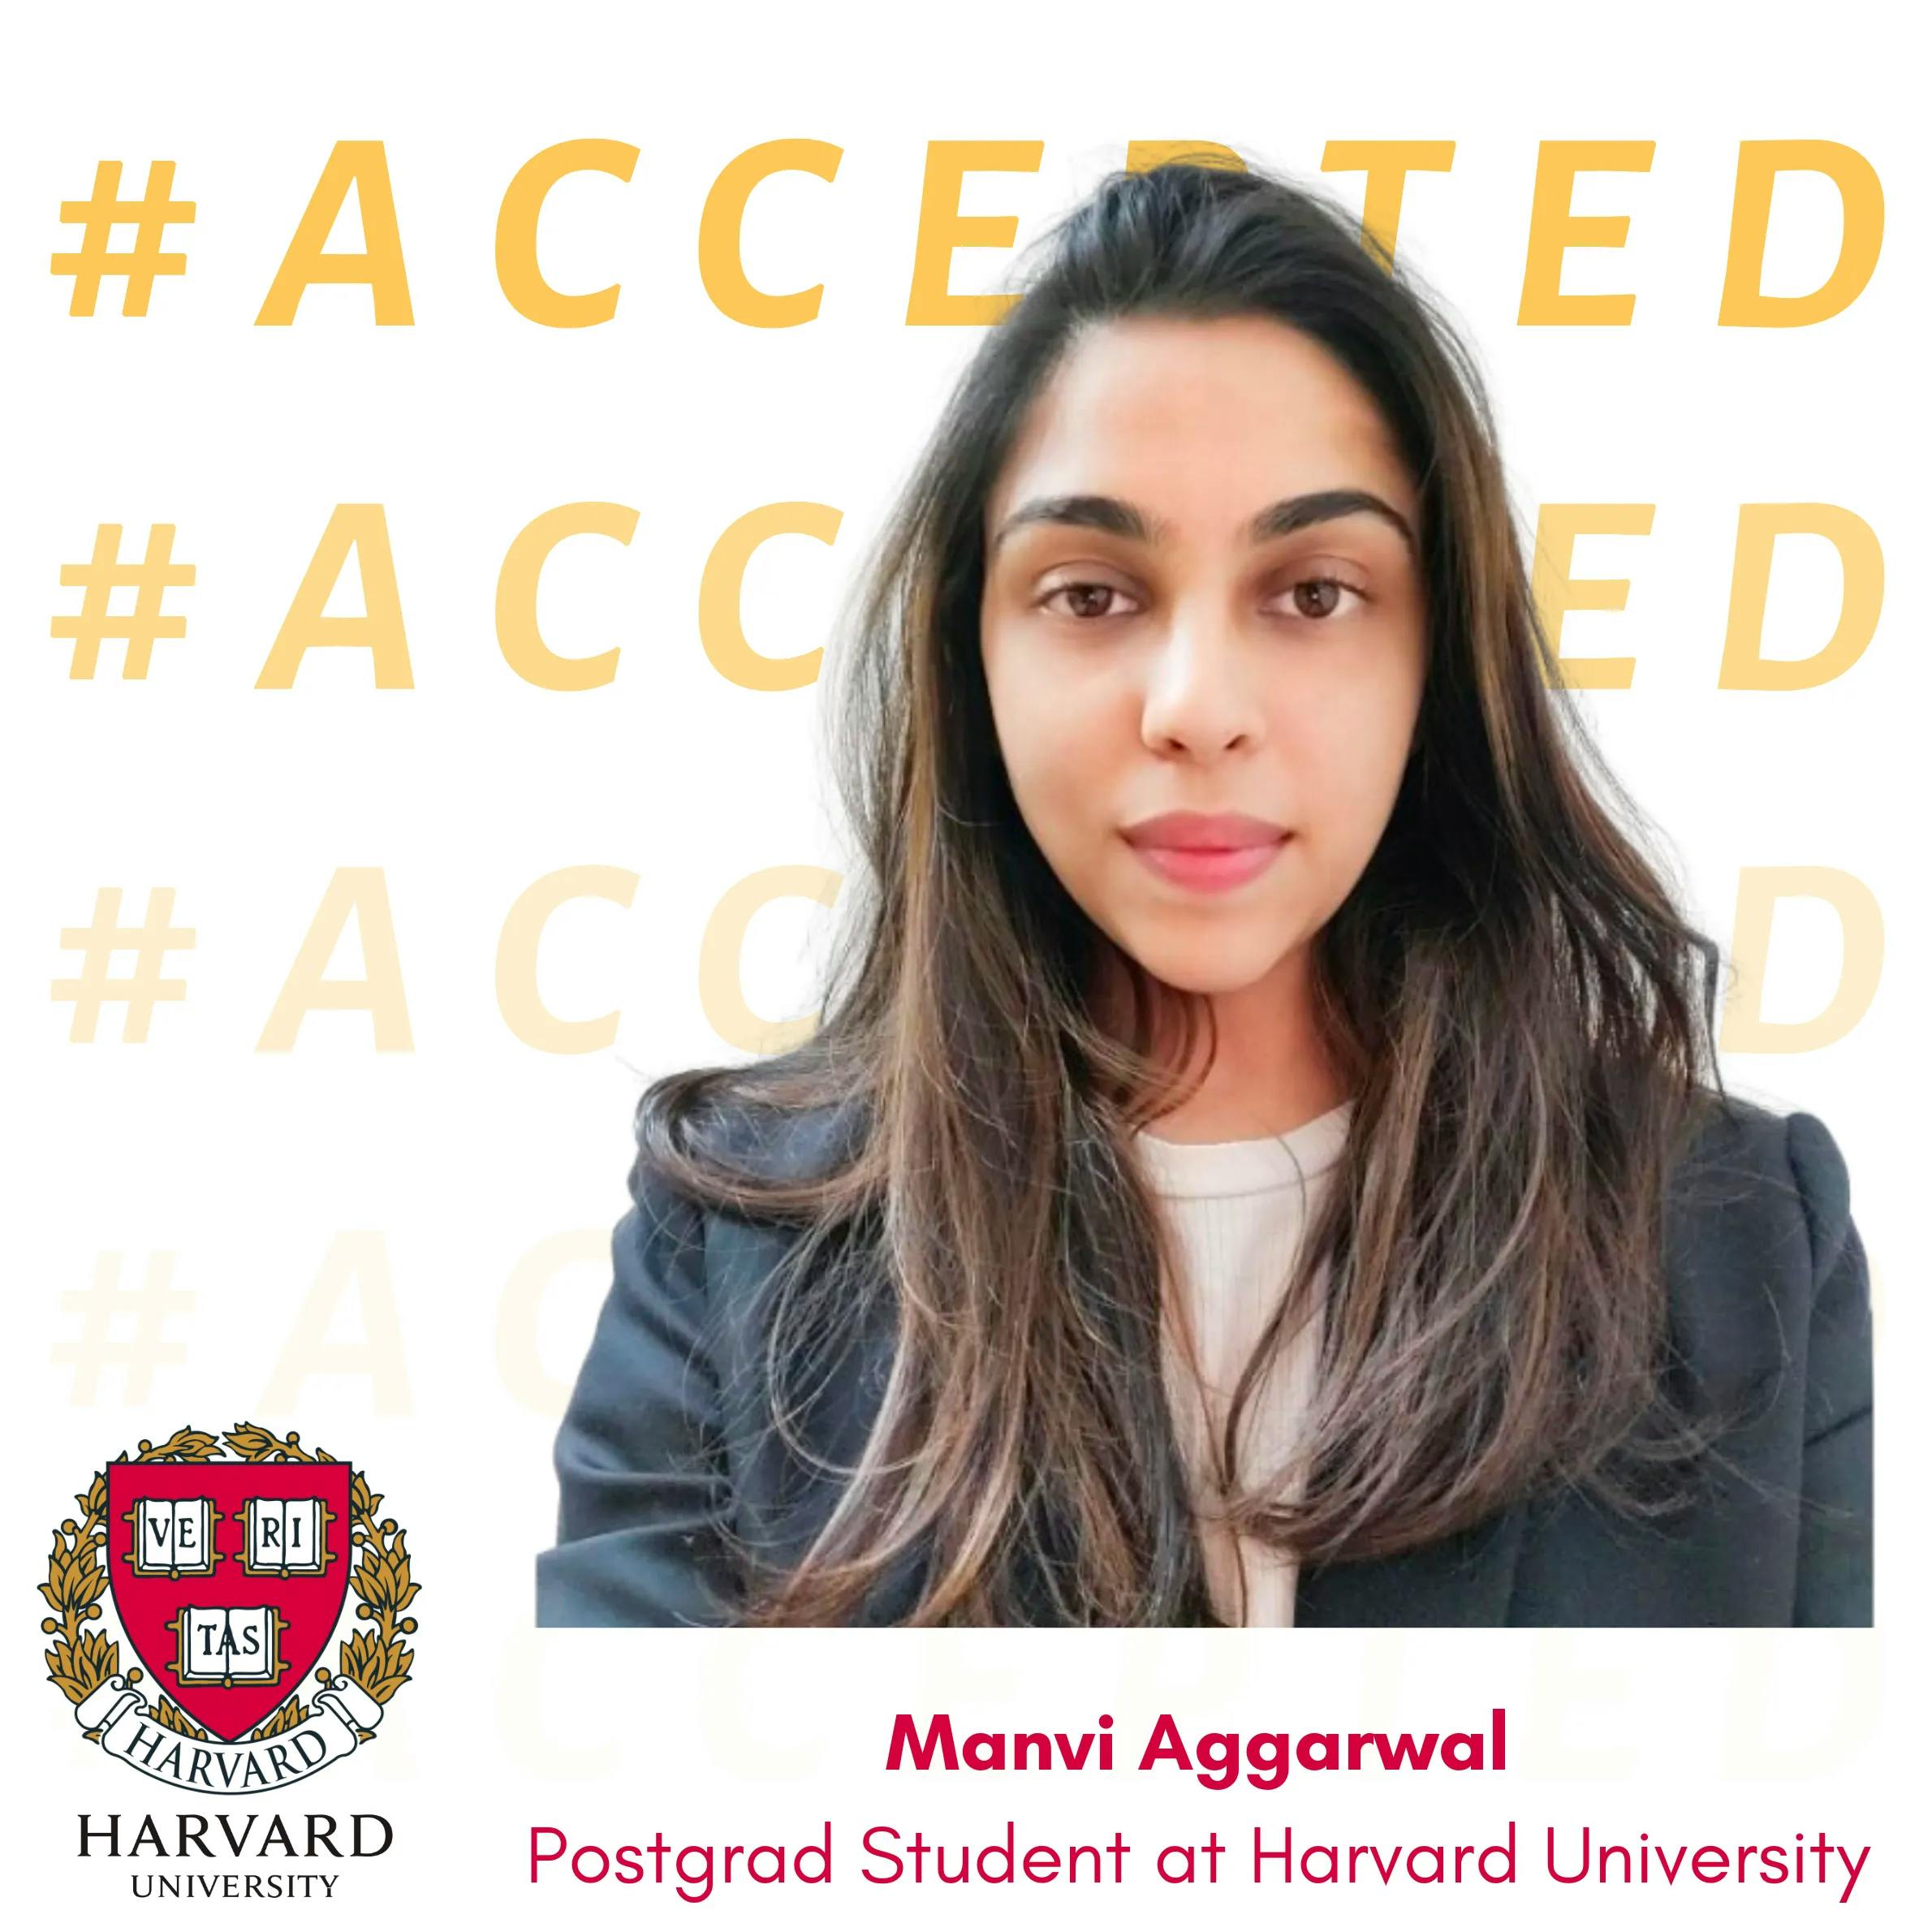 Manvi Aggarwal admitted to Harvard University